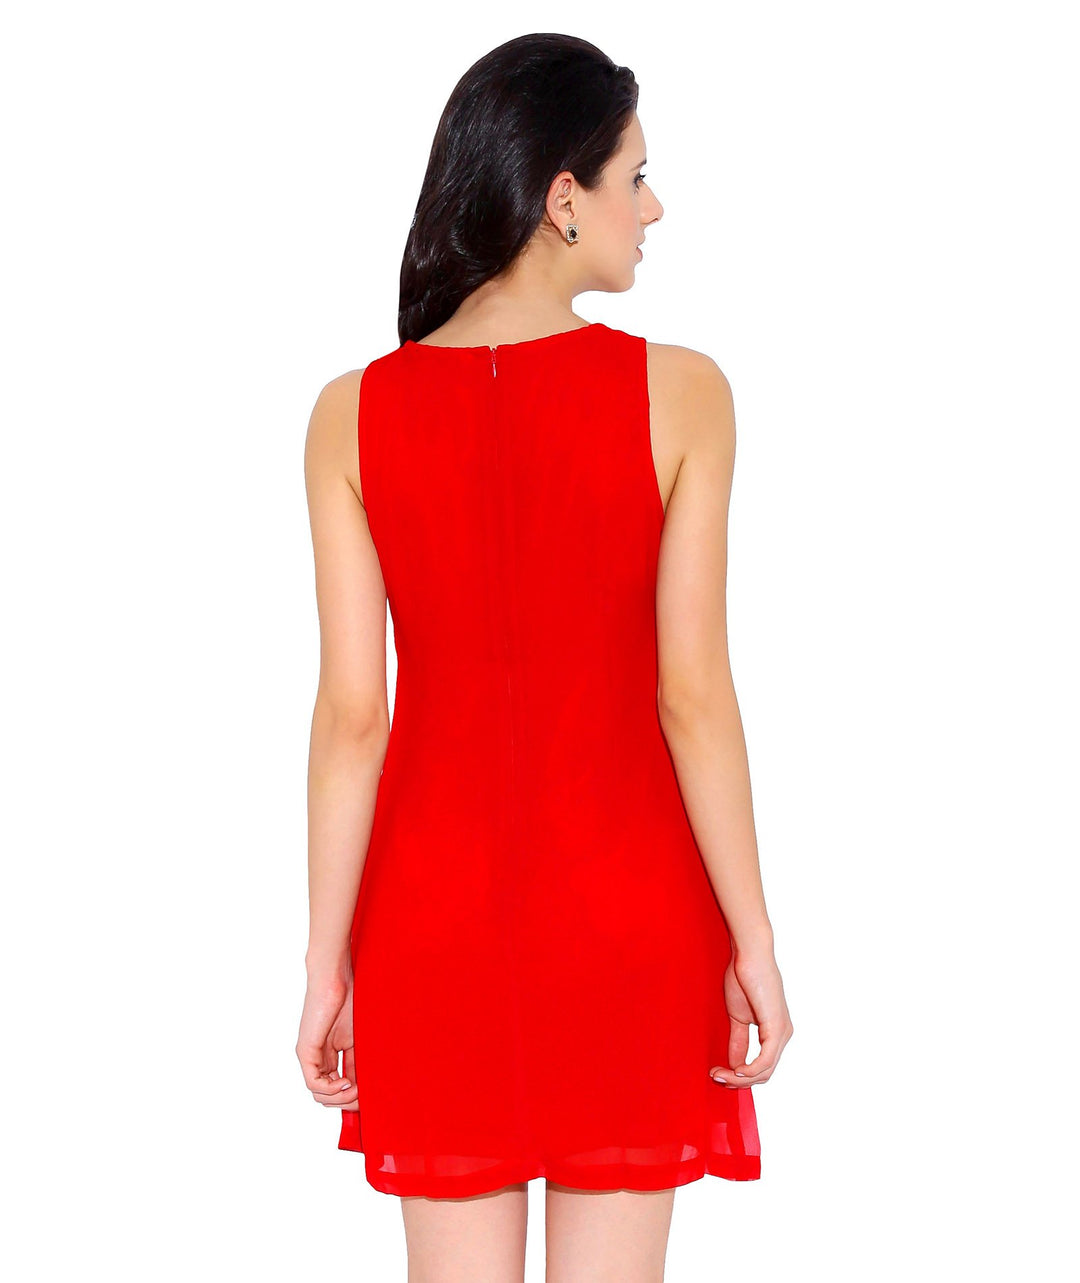 Red Georgette Dress